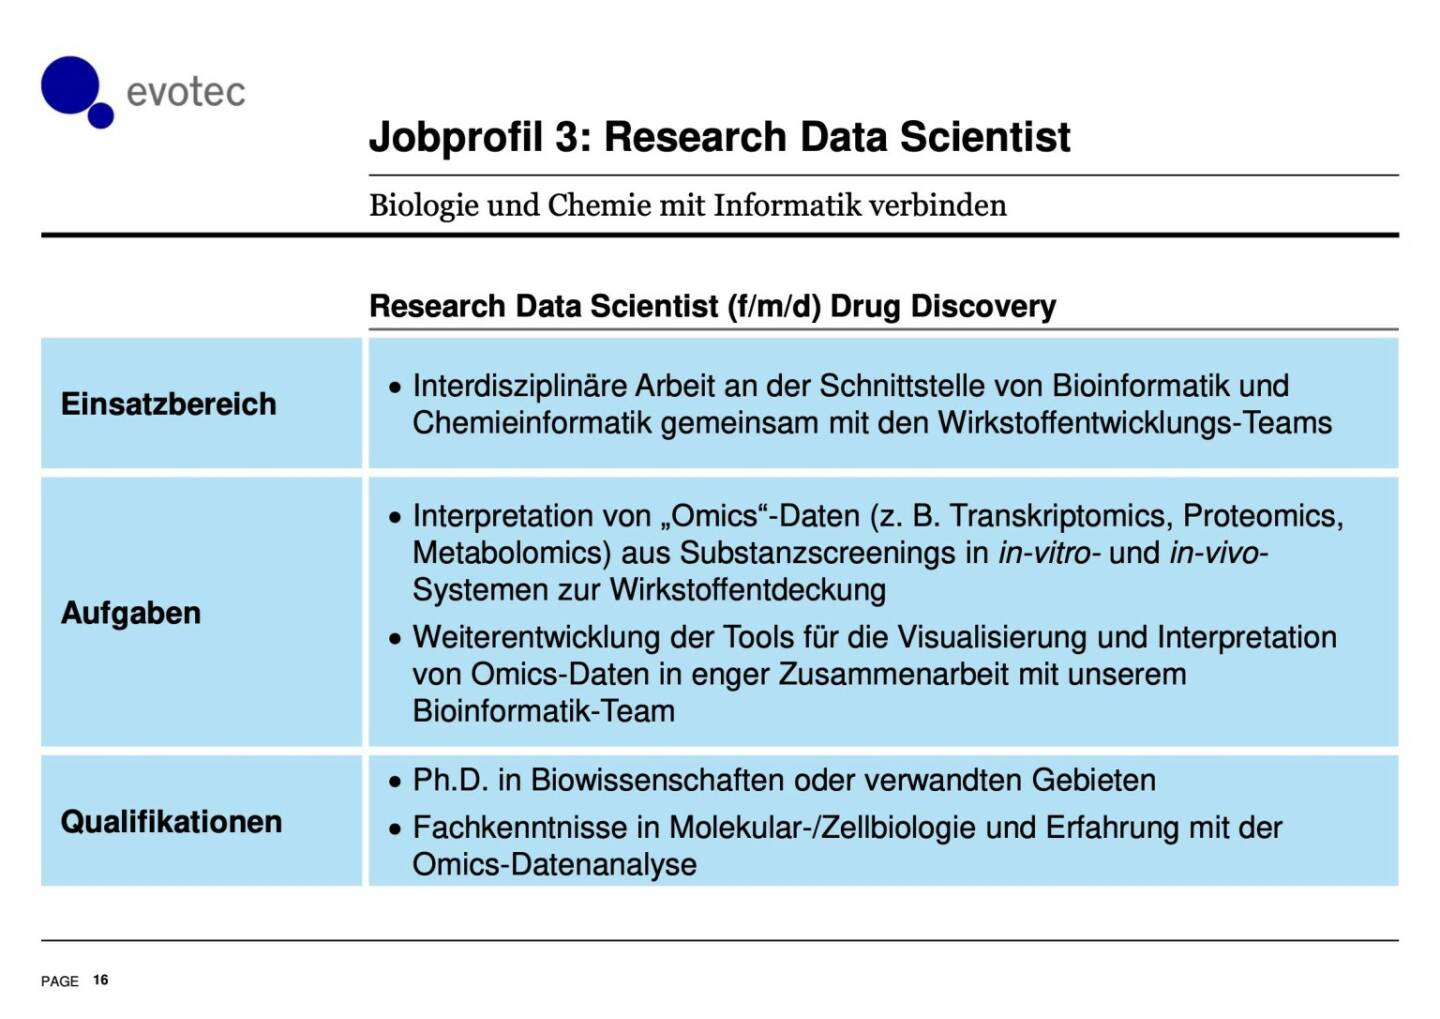 Evotec - Jobprofil 3: Research Data Scientist